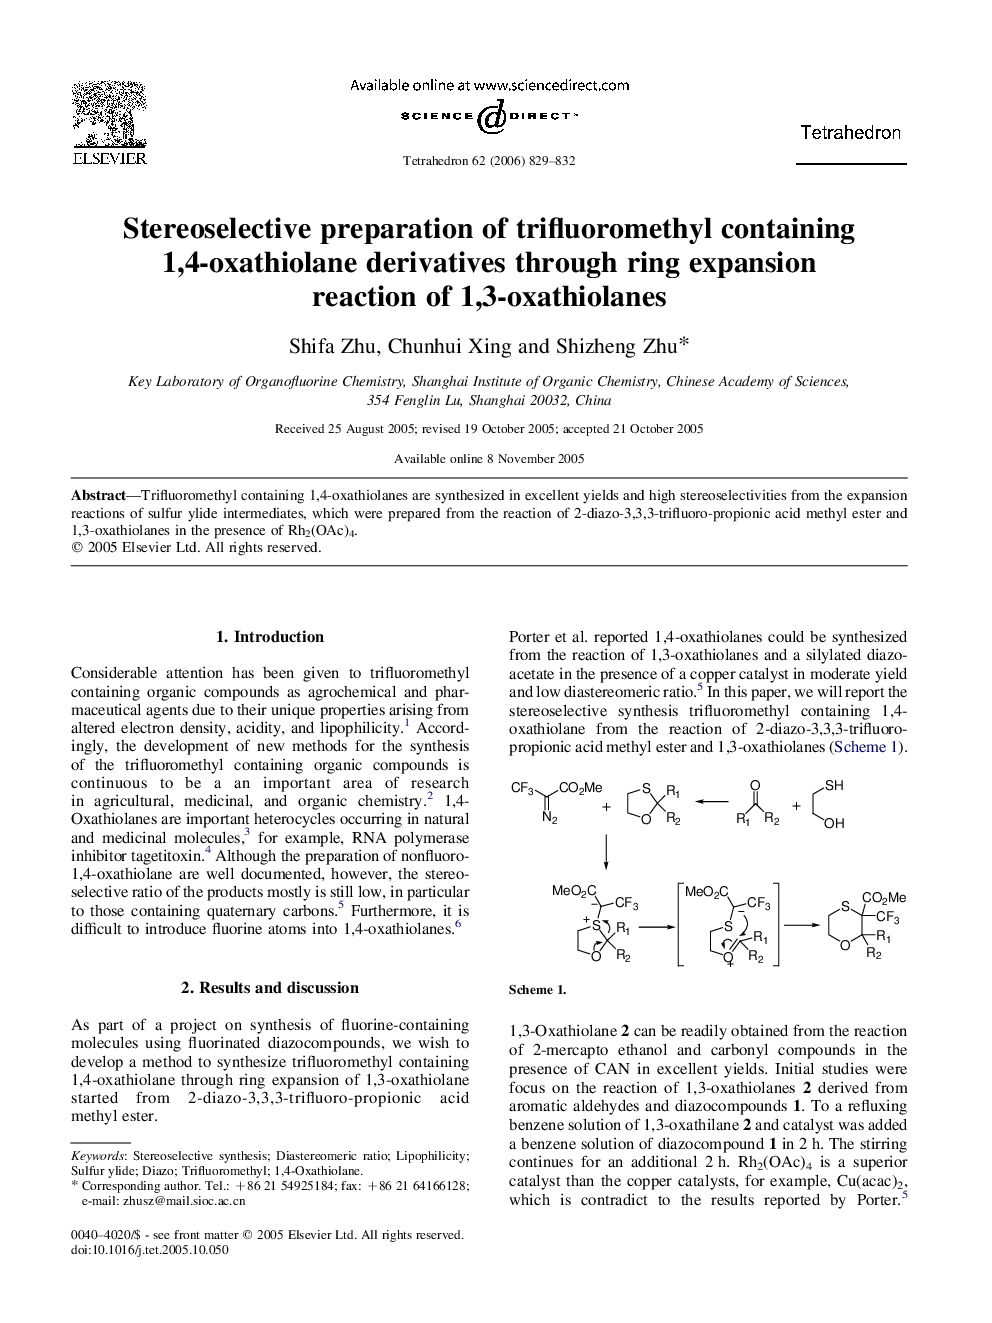 Stereoselective preparation of trifluoromethyl containing 1,4-oxathiolane derivatives through ring expansion reaction of 1,3-oxathiolanes